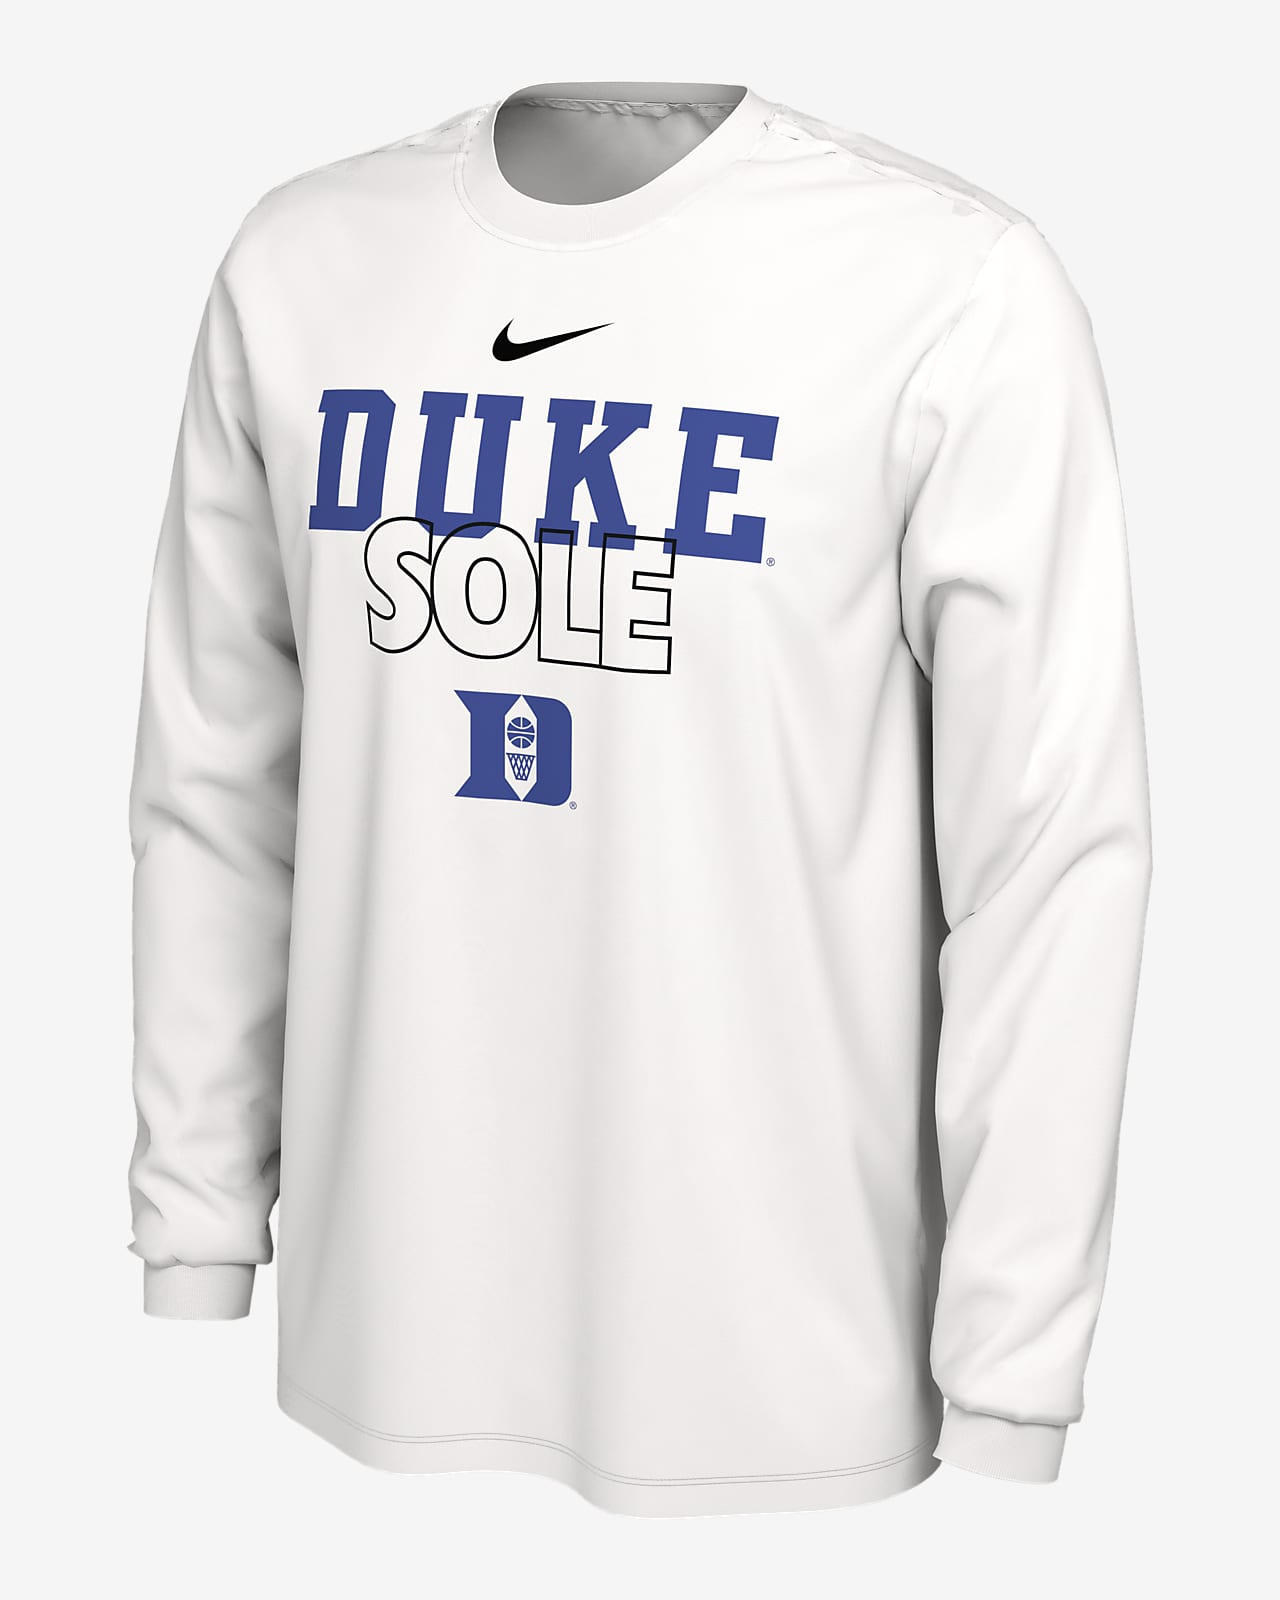 Duke Legend Men's Nike Dri-FIT College Long-Sleeve Nike.com